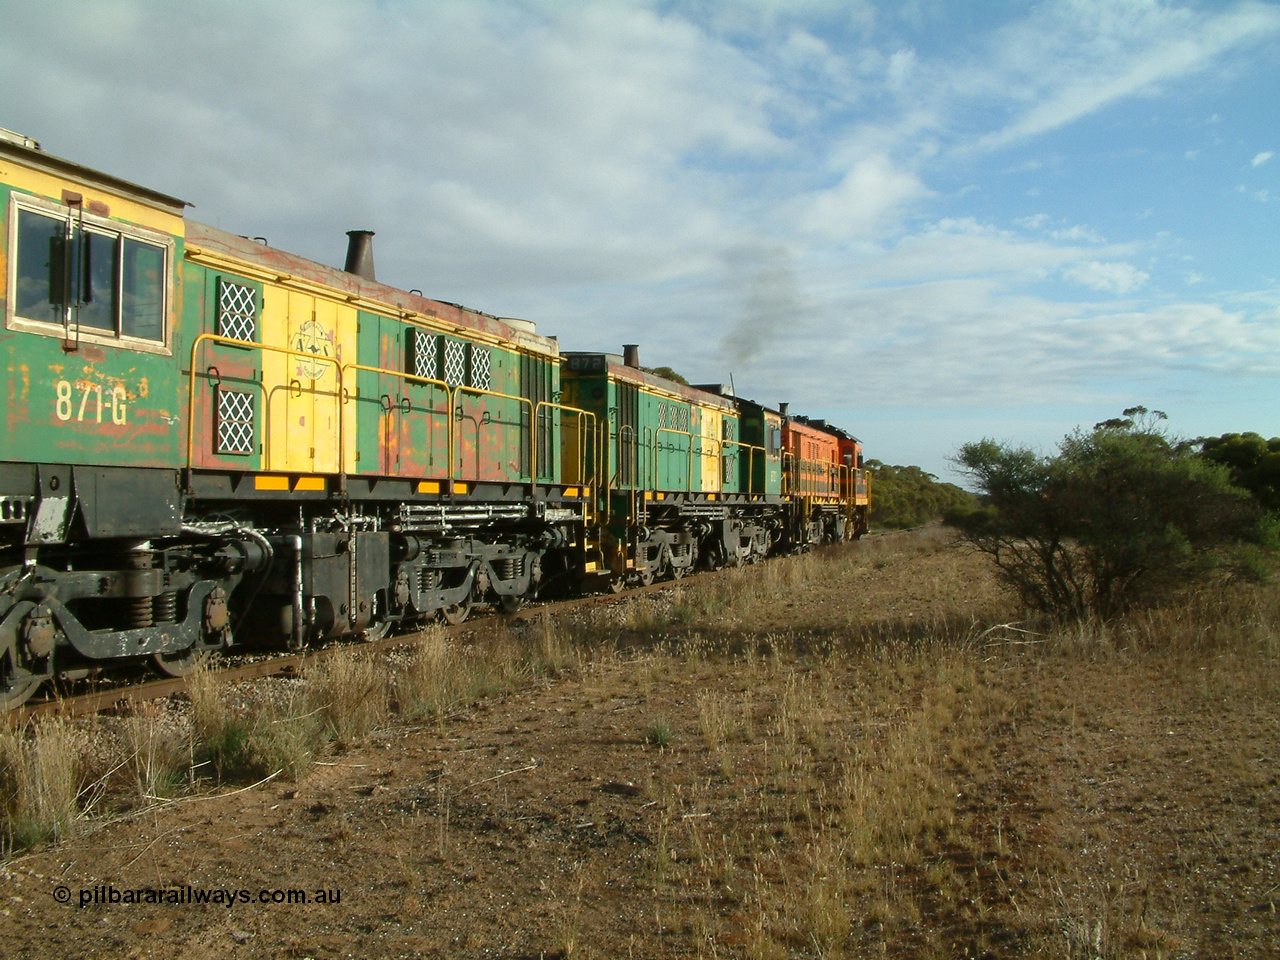 030409 081026
Warramboo, empty grain train powers away towards Kyancutta behind DA class DA 7 leading two 830 class units 872 and 871.
Keywords: 830-class;871;G3422-1;AE-Goodwin;ALCo;DL531;